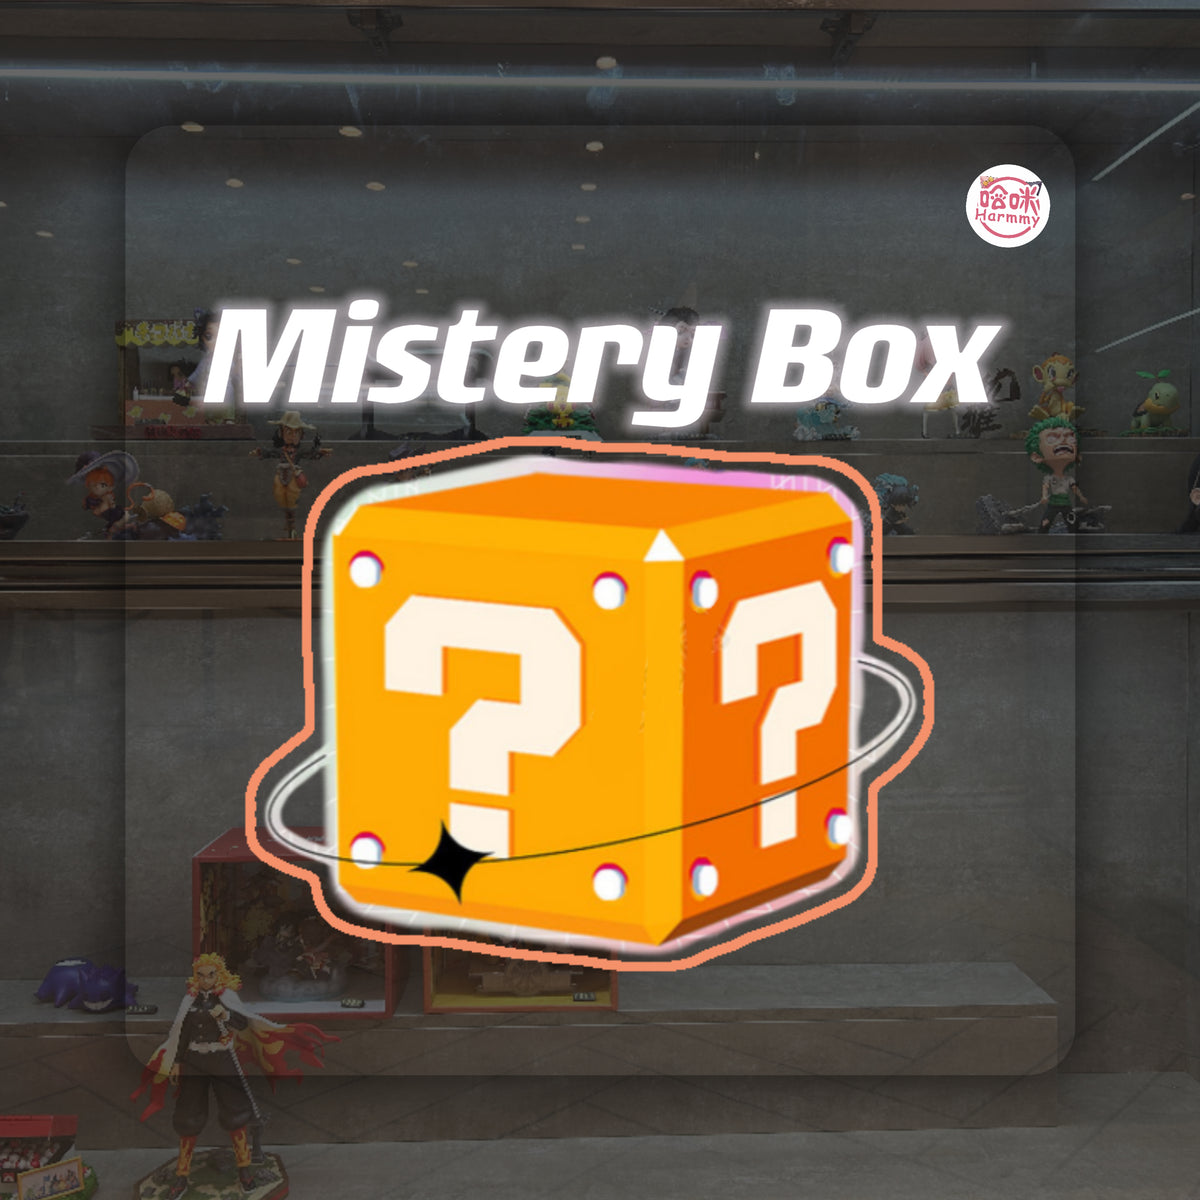 Mystery box!